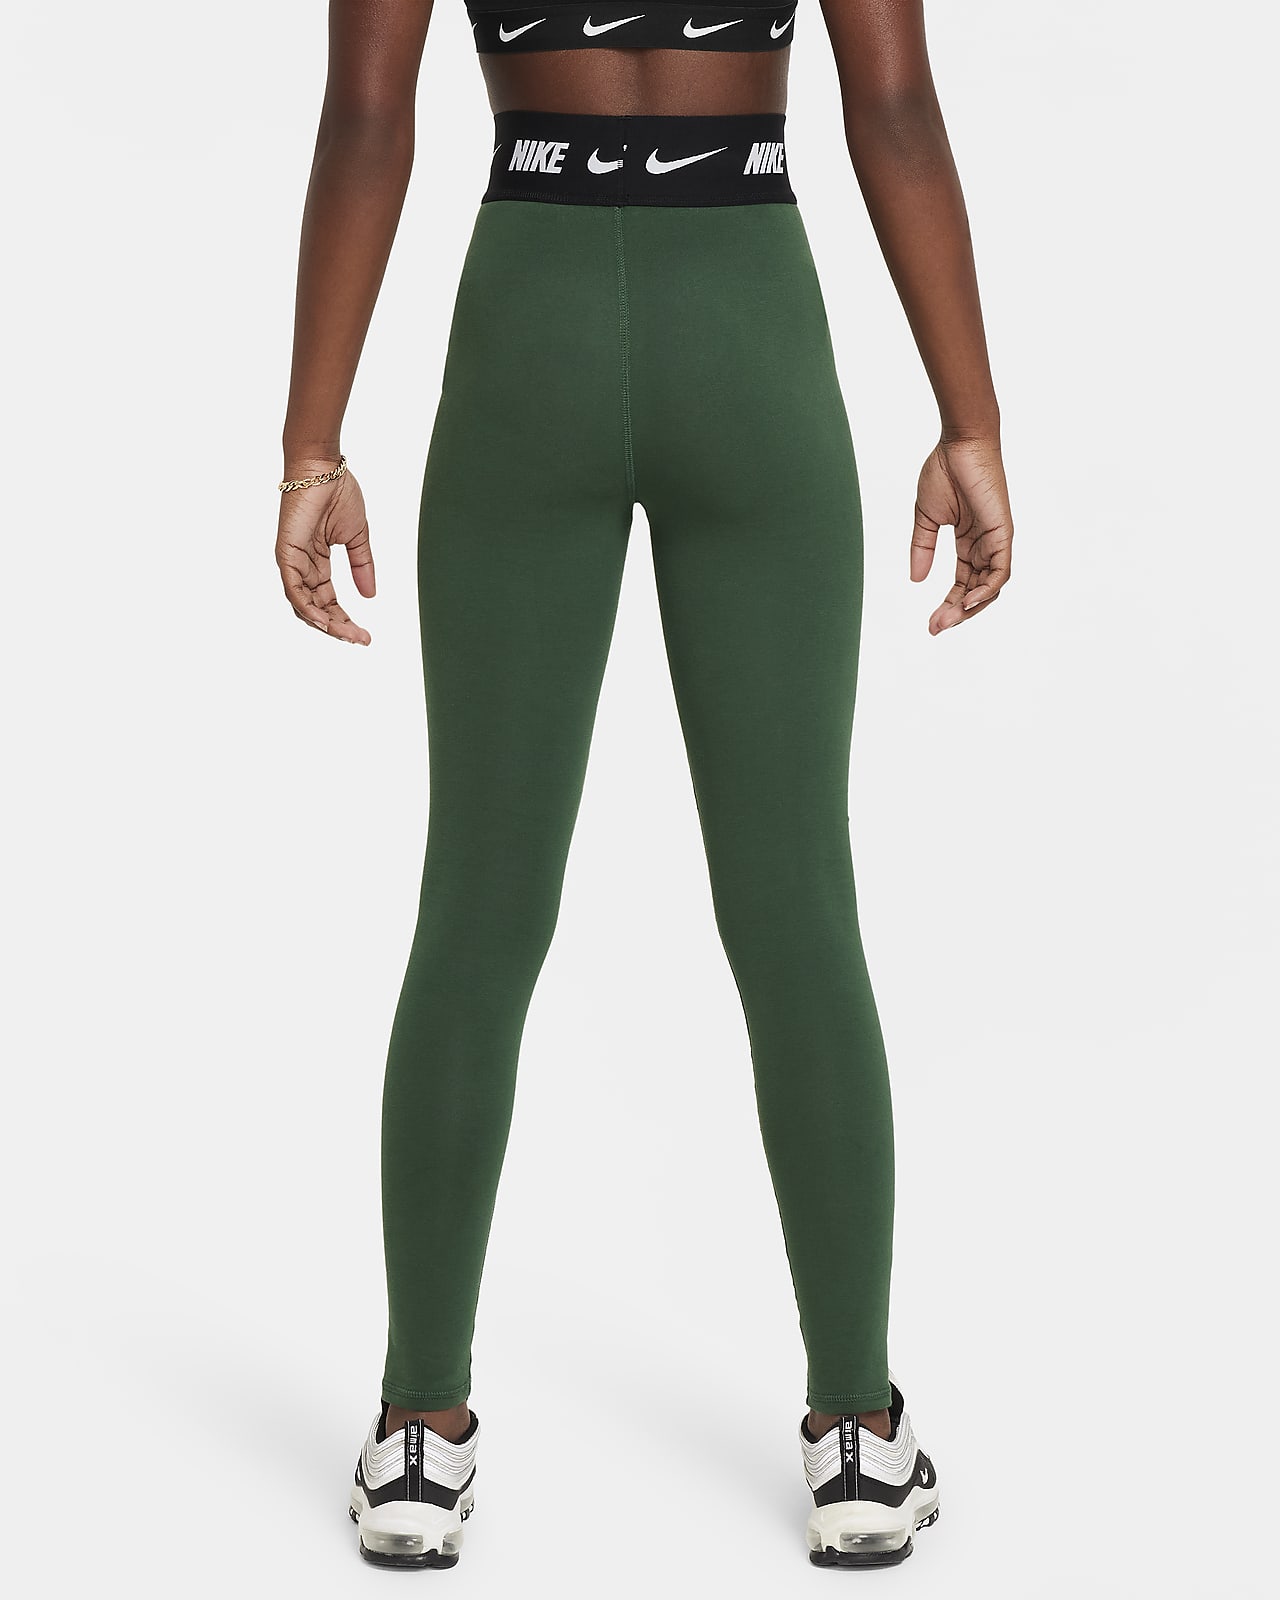 Nike Womens Go MR 7/8 Leggings - Green | Life Style Sports UK